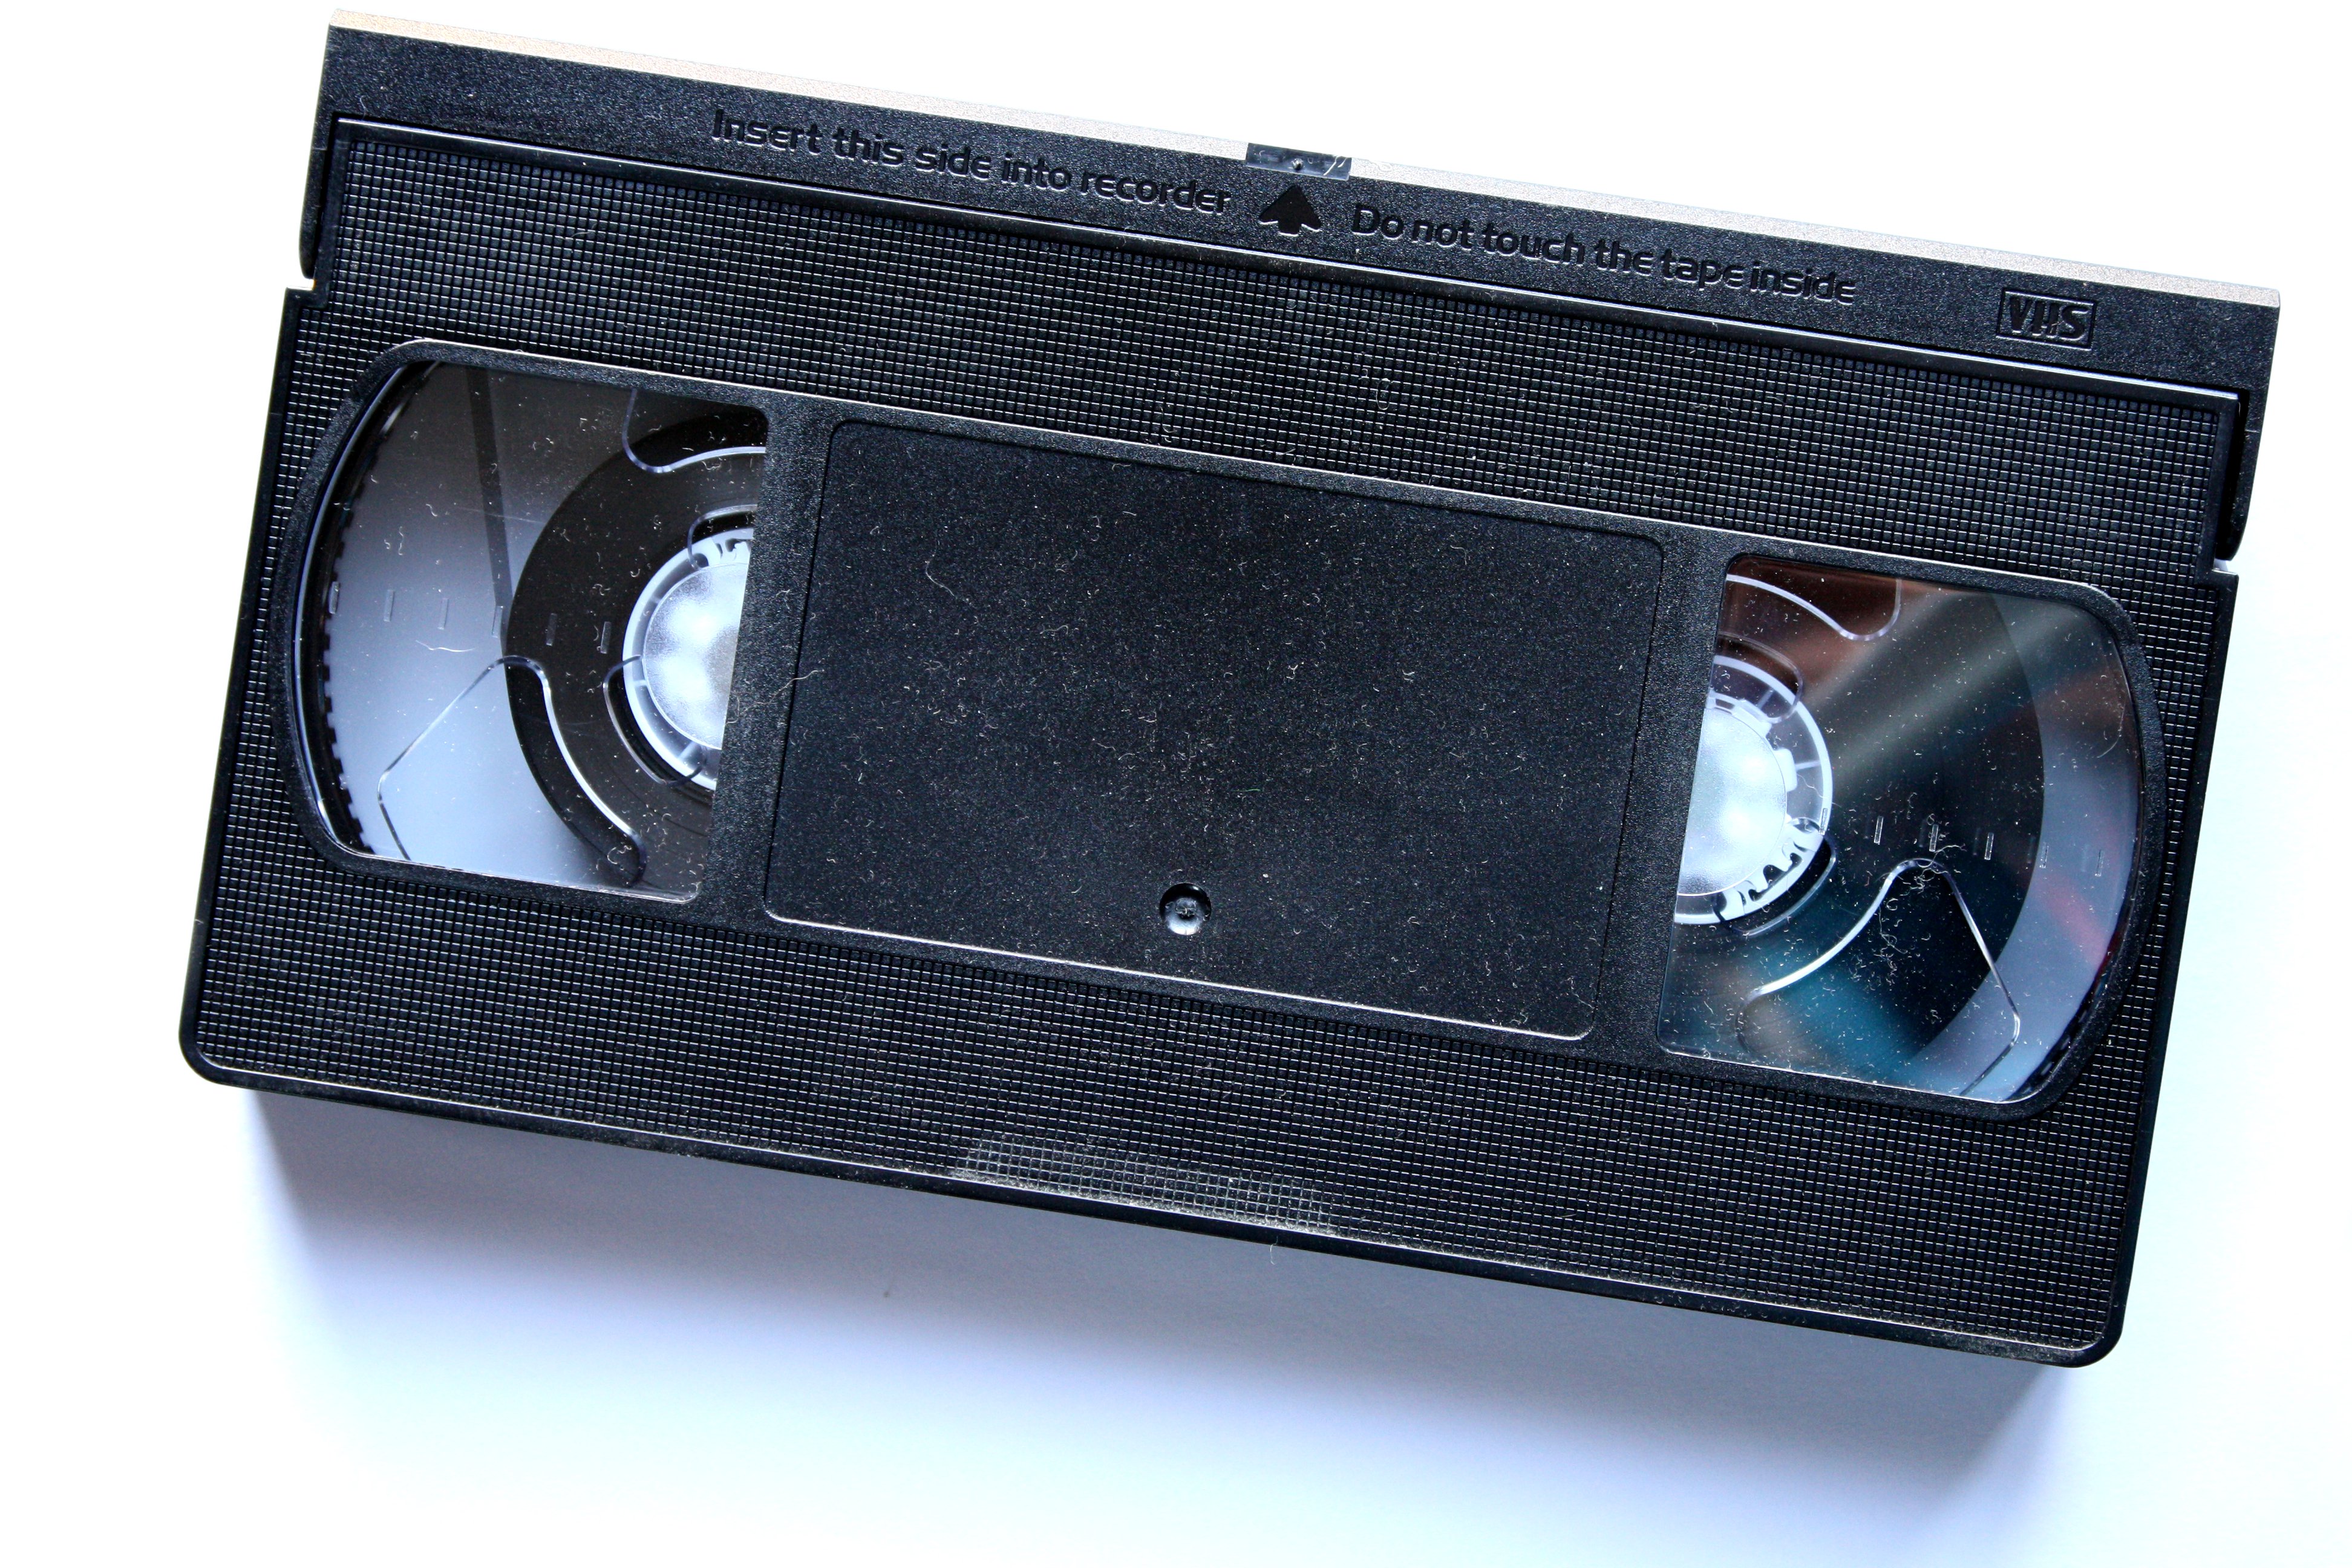 Батину кассету. ВХС кассеты. ВХС И аудиокассеты. Видеокассета VHS. VHS кассета 1800.